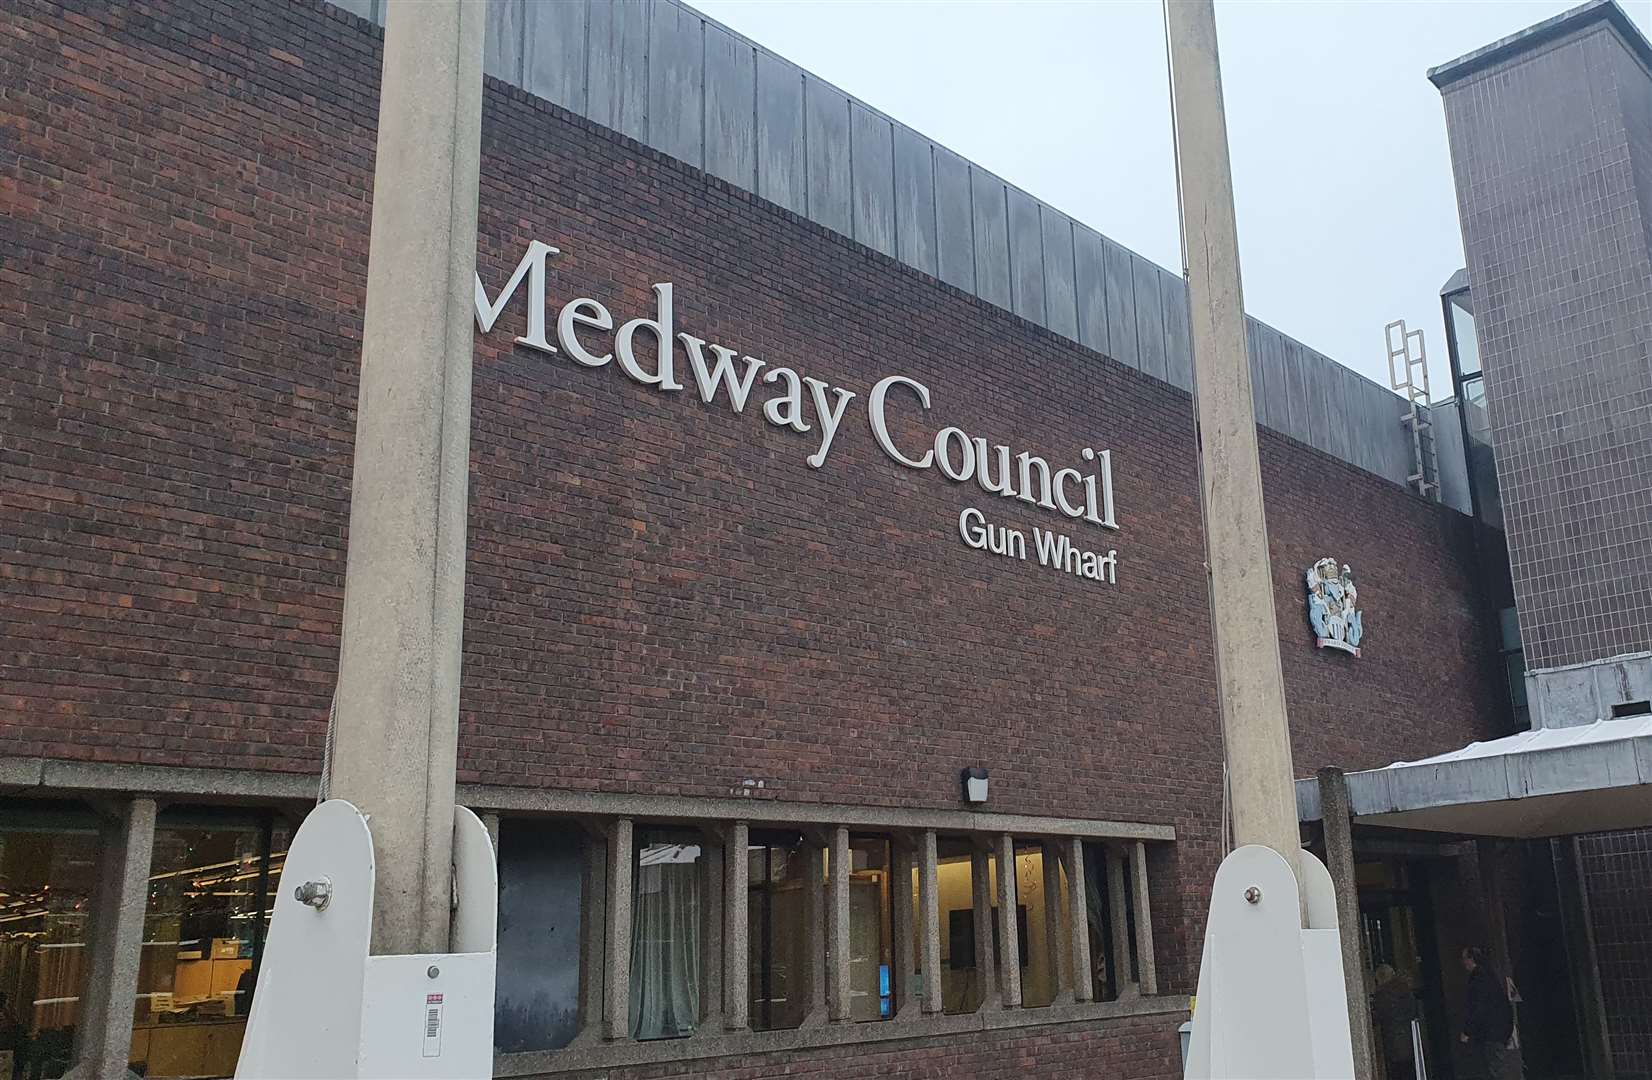 Medway Council headquarters, Gun Wharf. Photo: Stock